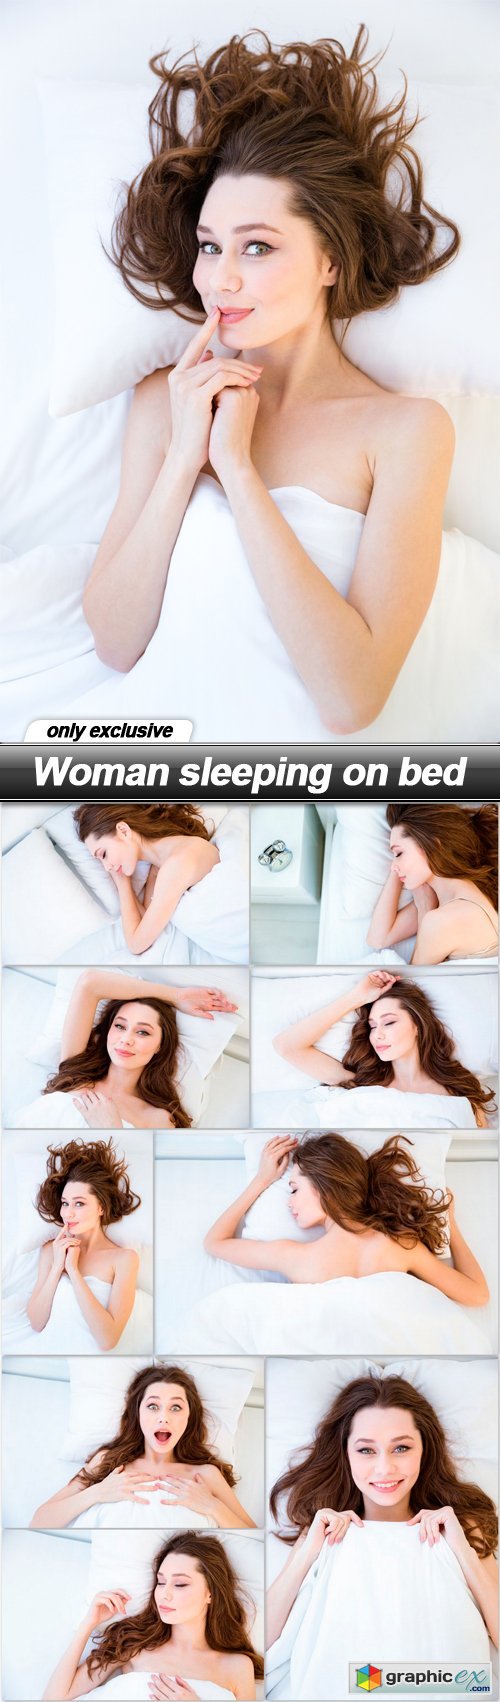 Woman sleeping on bed - 9 UHQ JPEG